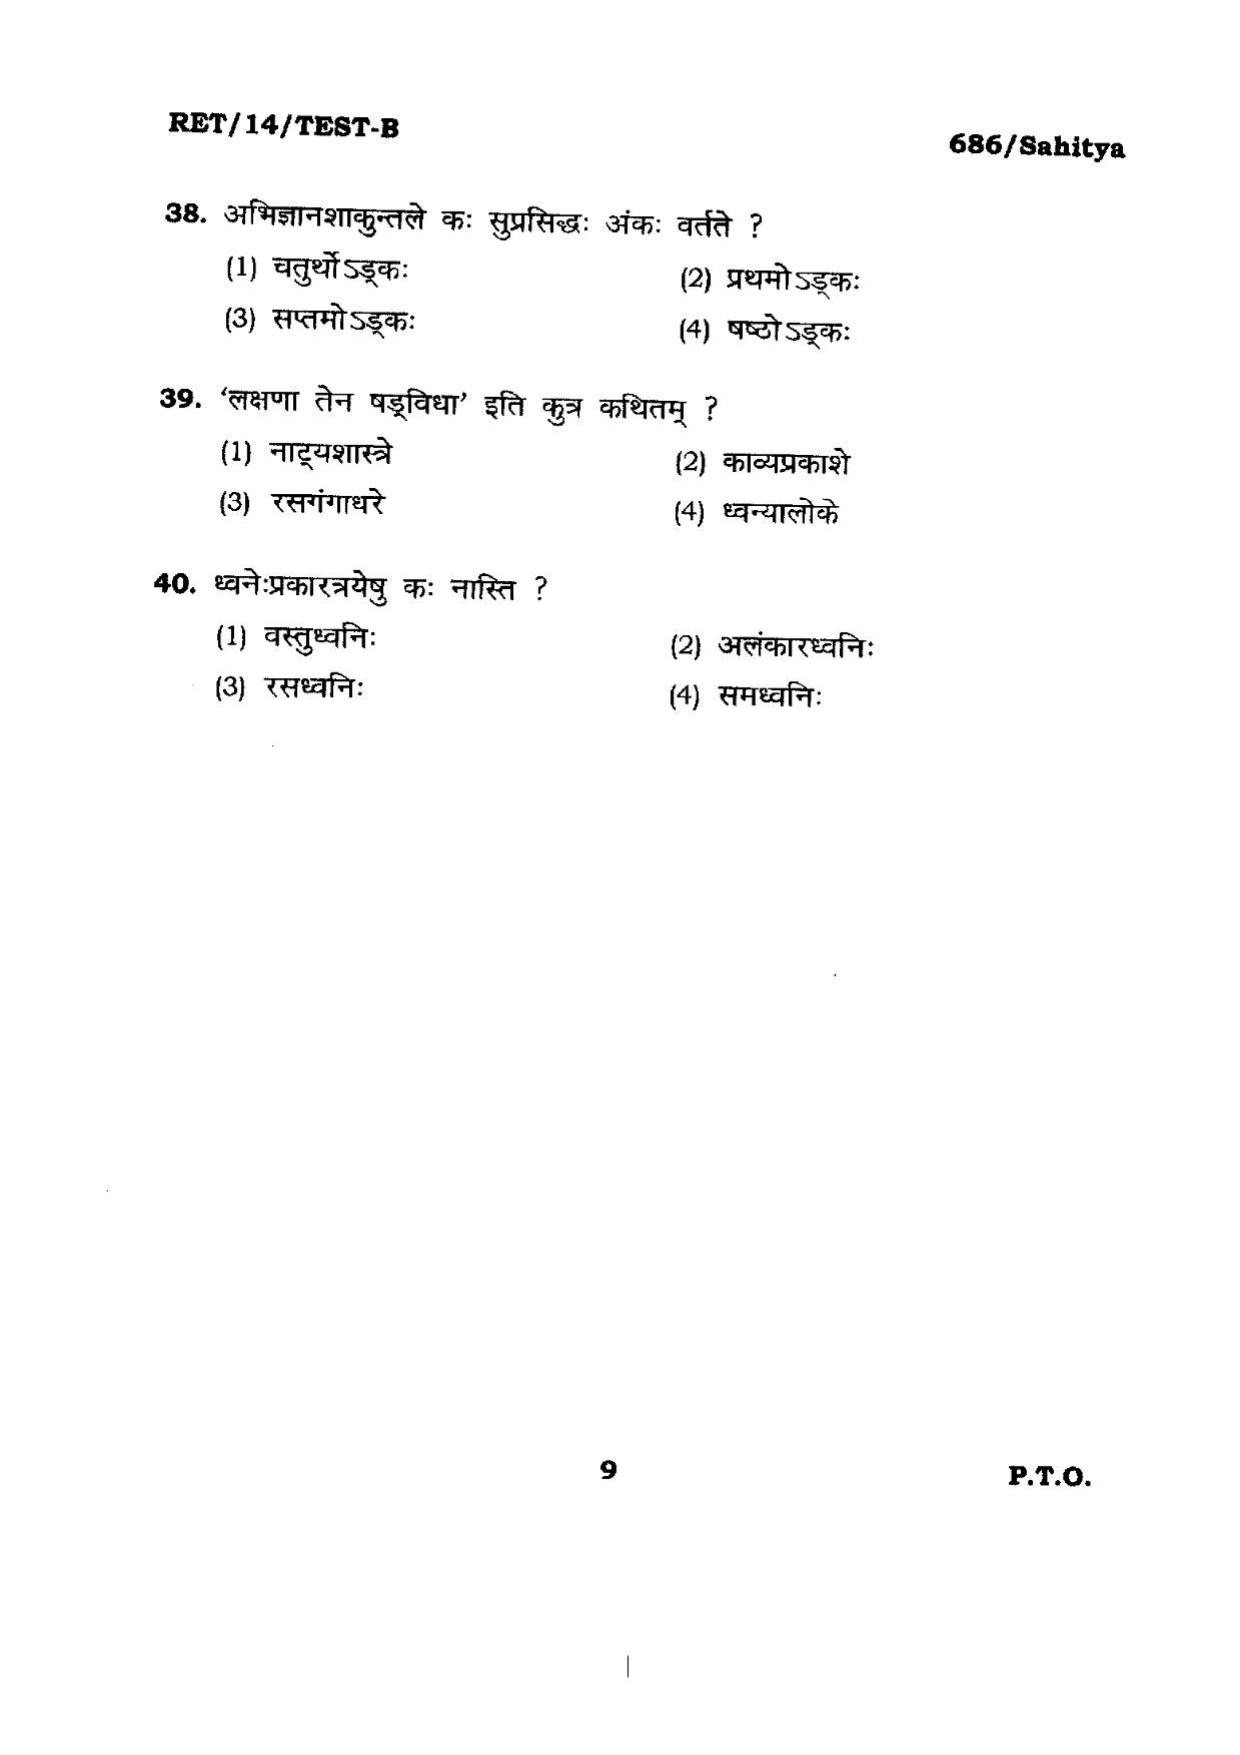 BHU RET Sahitya 2014 Question Paper - Page 9